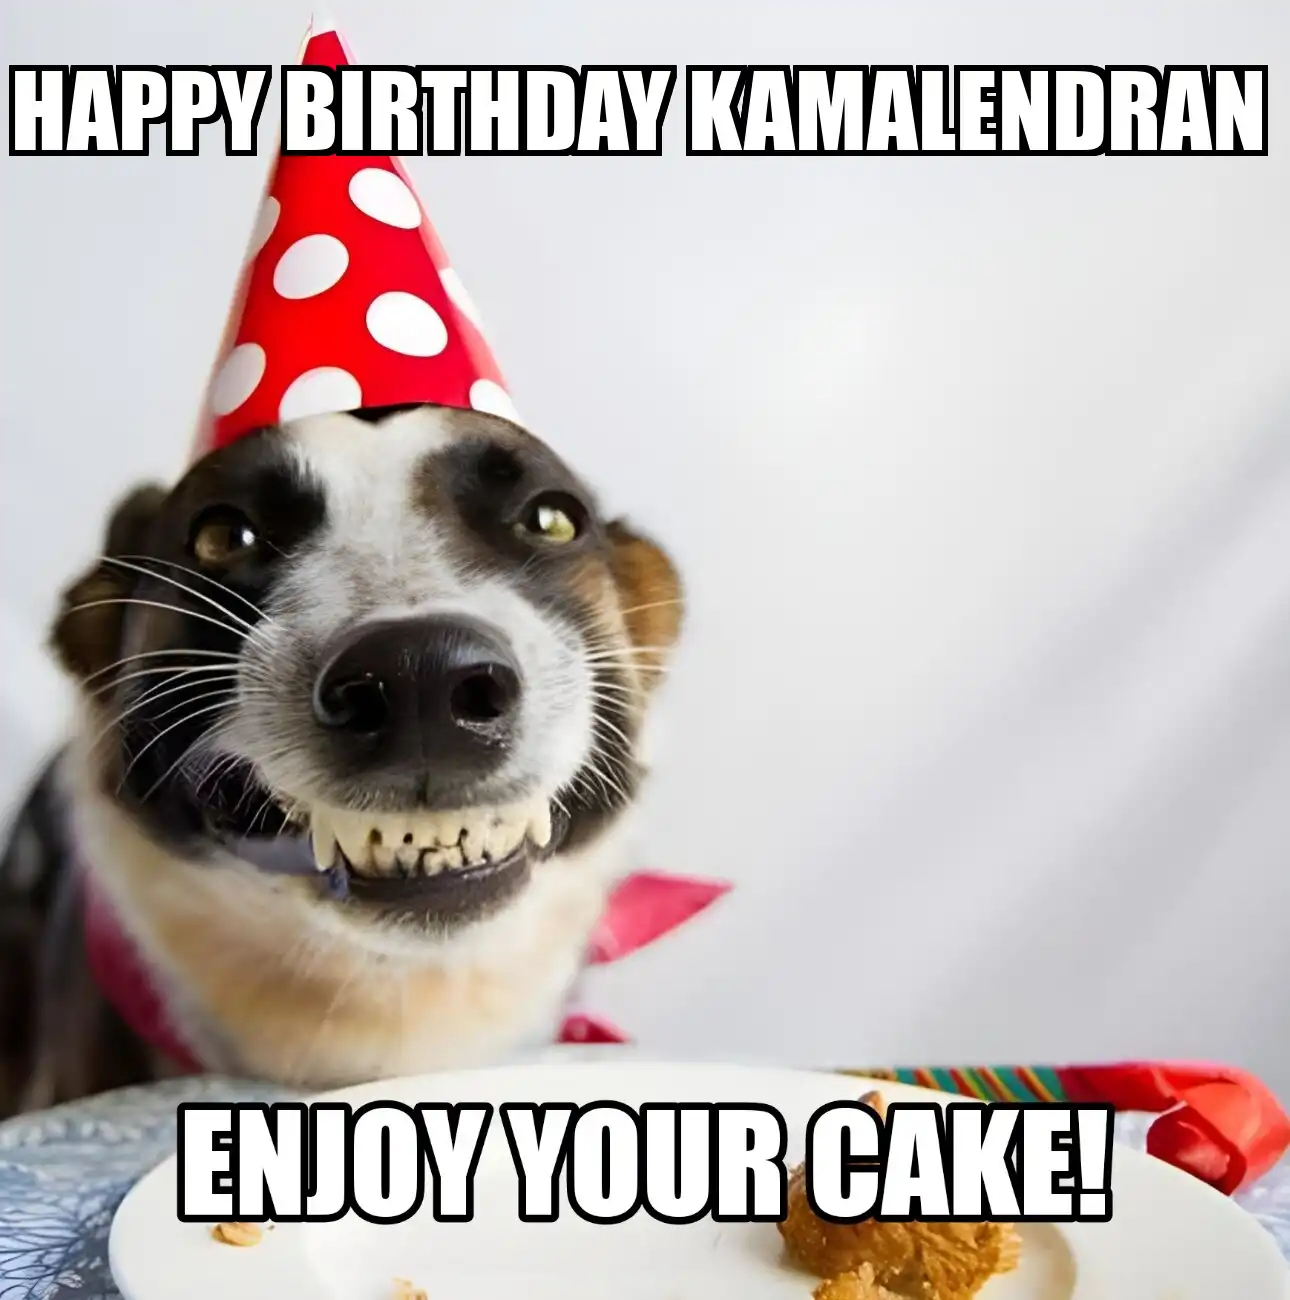 Happy Birthday Kamalendran Enjoy Your Cake Dog Meme